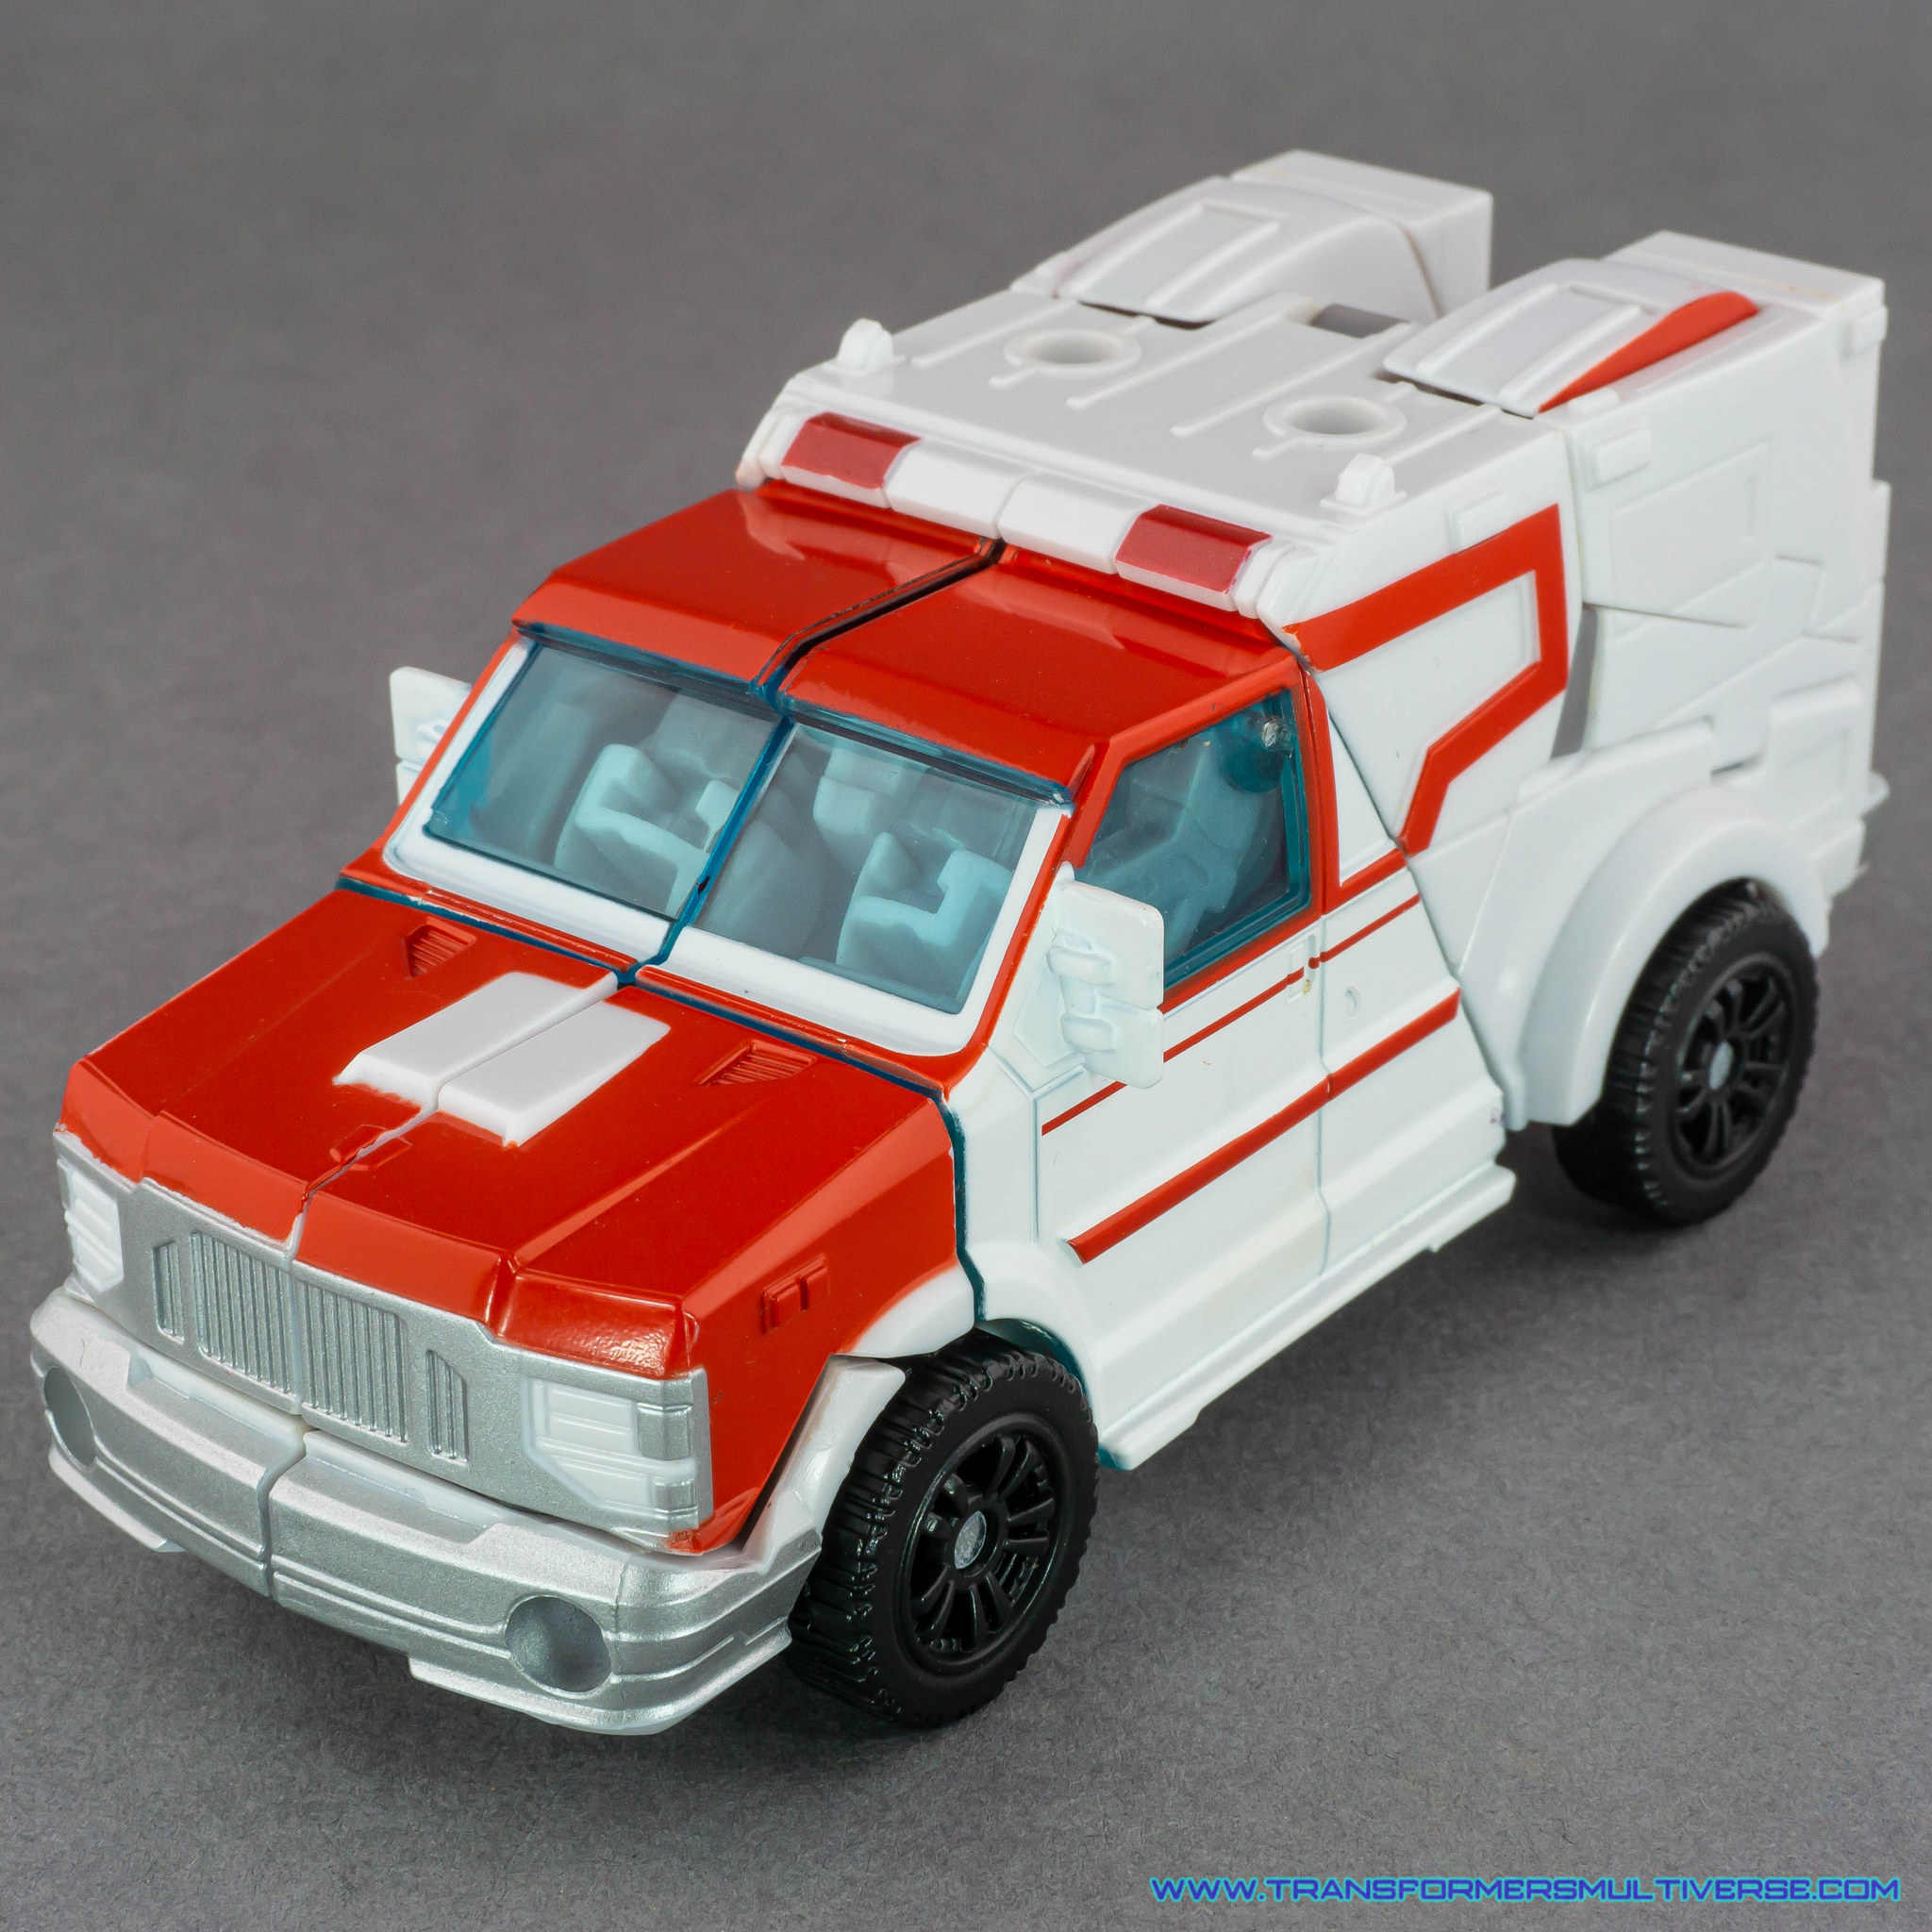 Transformers Prime Ratchet Ambulance mode, alternate angle